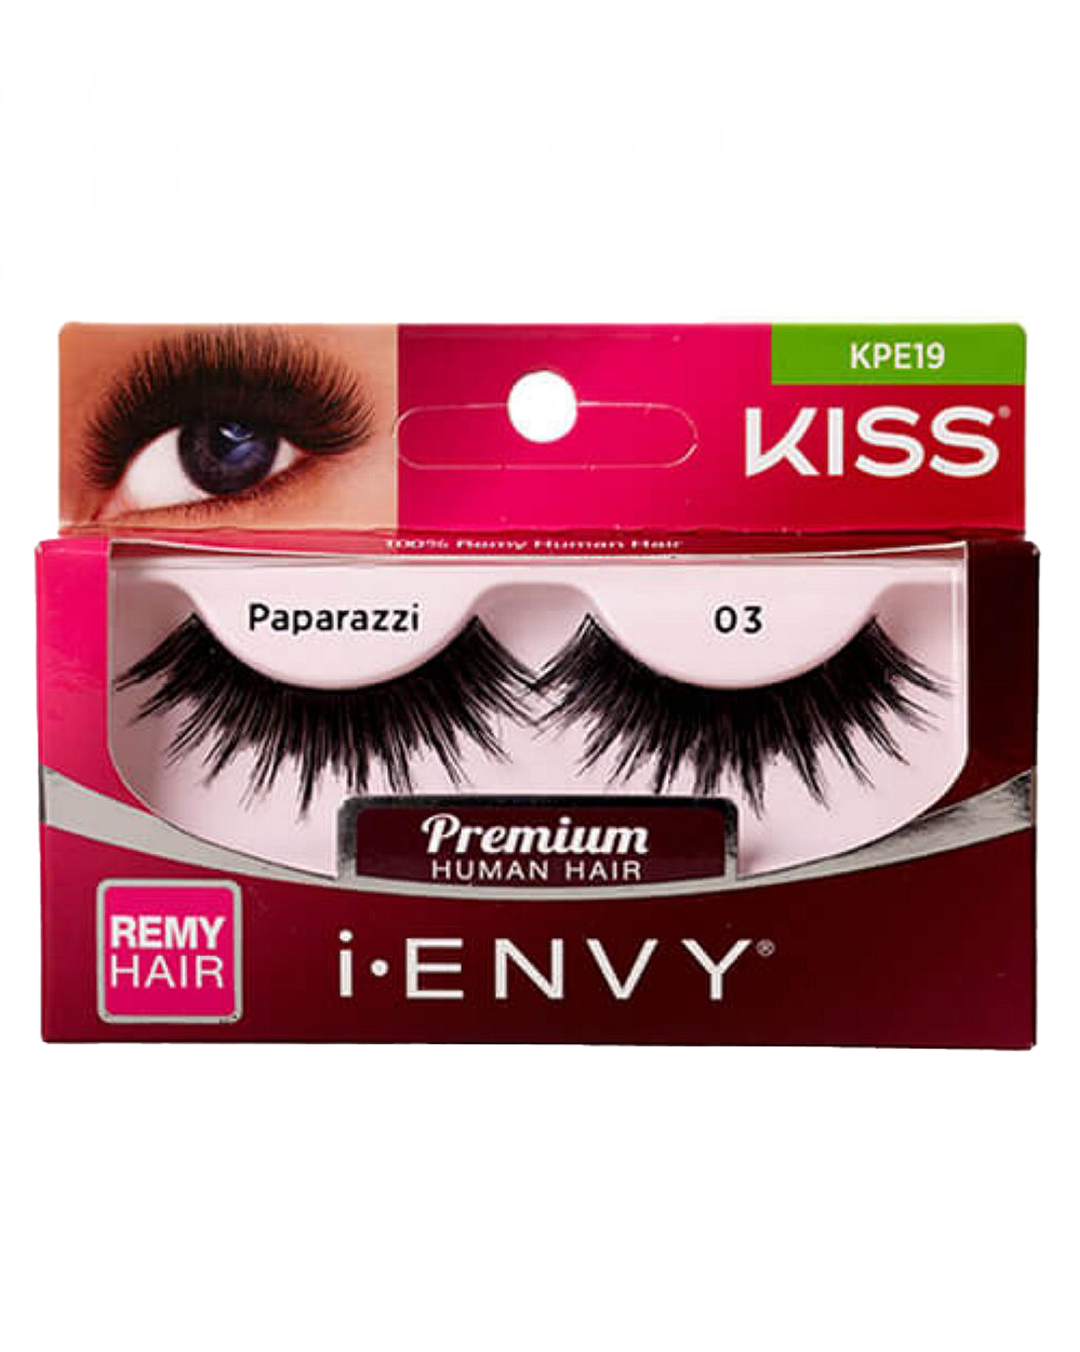 Kiss Premium Lashes - Paparazzi 03 (KPE19)